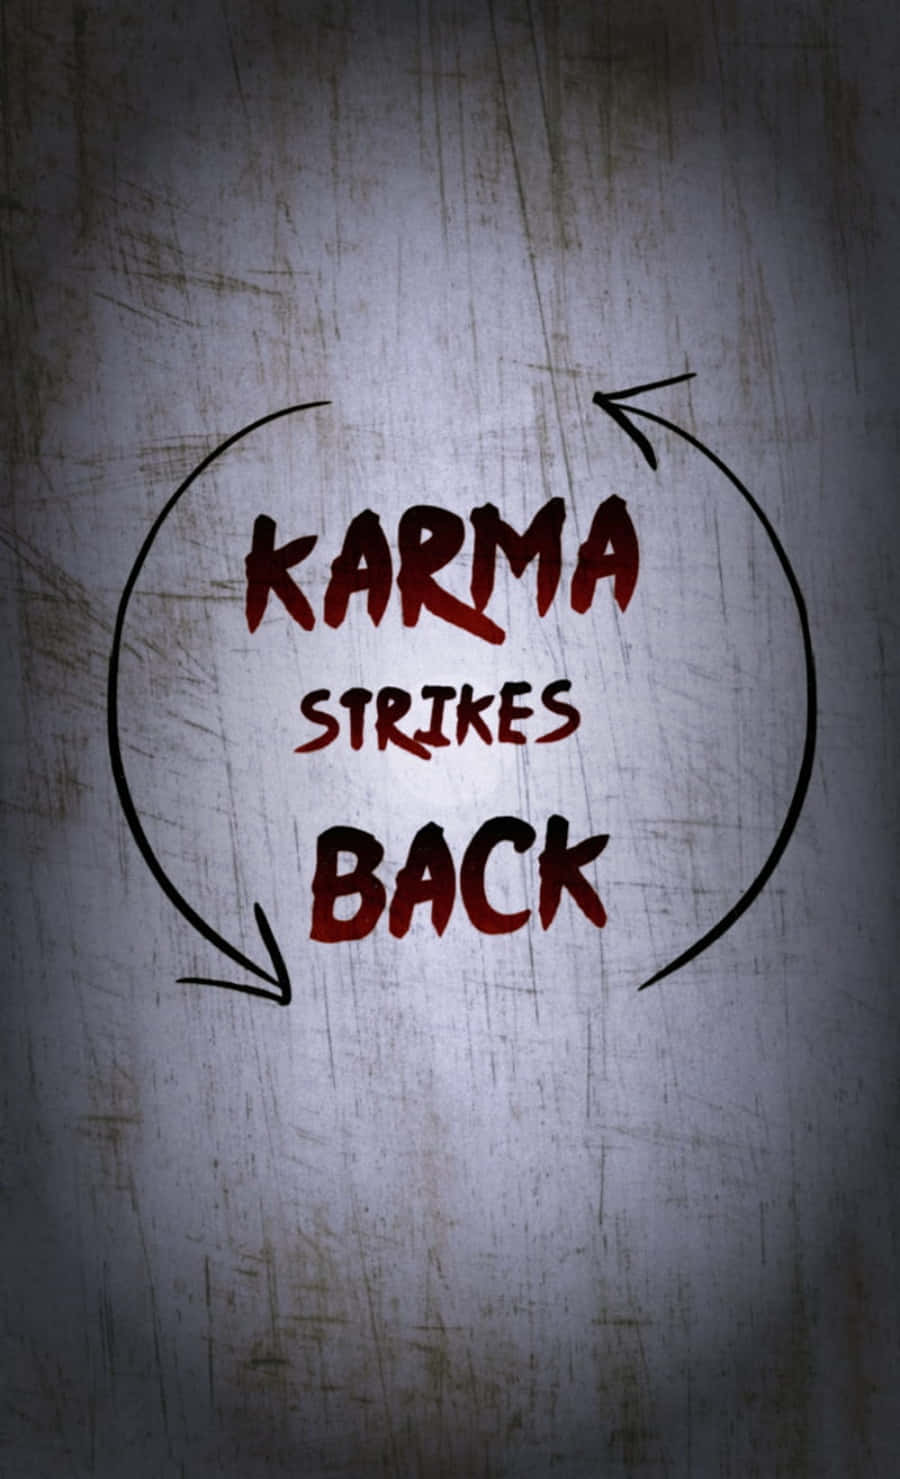 Karma Strikes Back On A Grungy Background